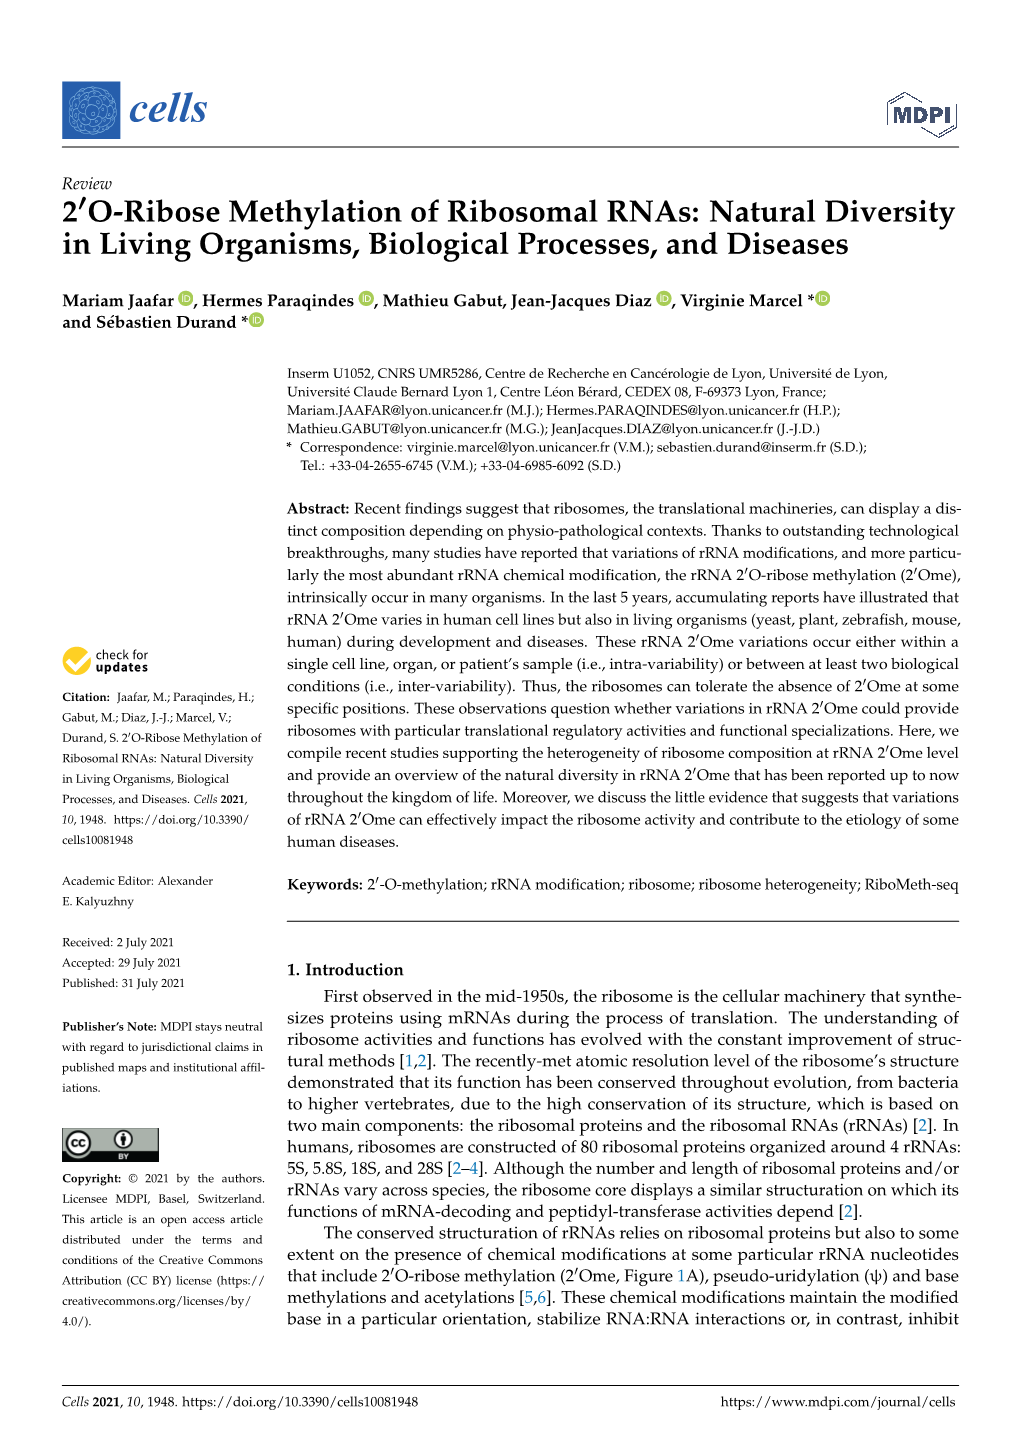 2'O-Ribose Methylation of Ribosomal Rnas: Natural Diversity in Living Organisms, Biological Processes, and Diseases